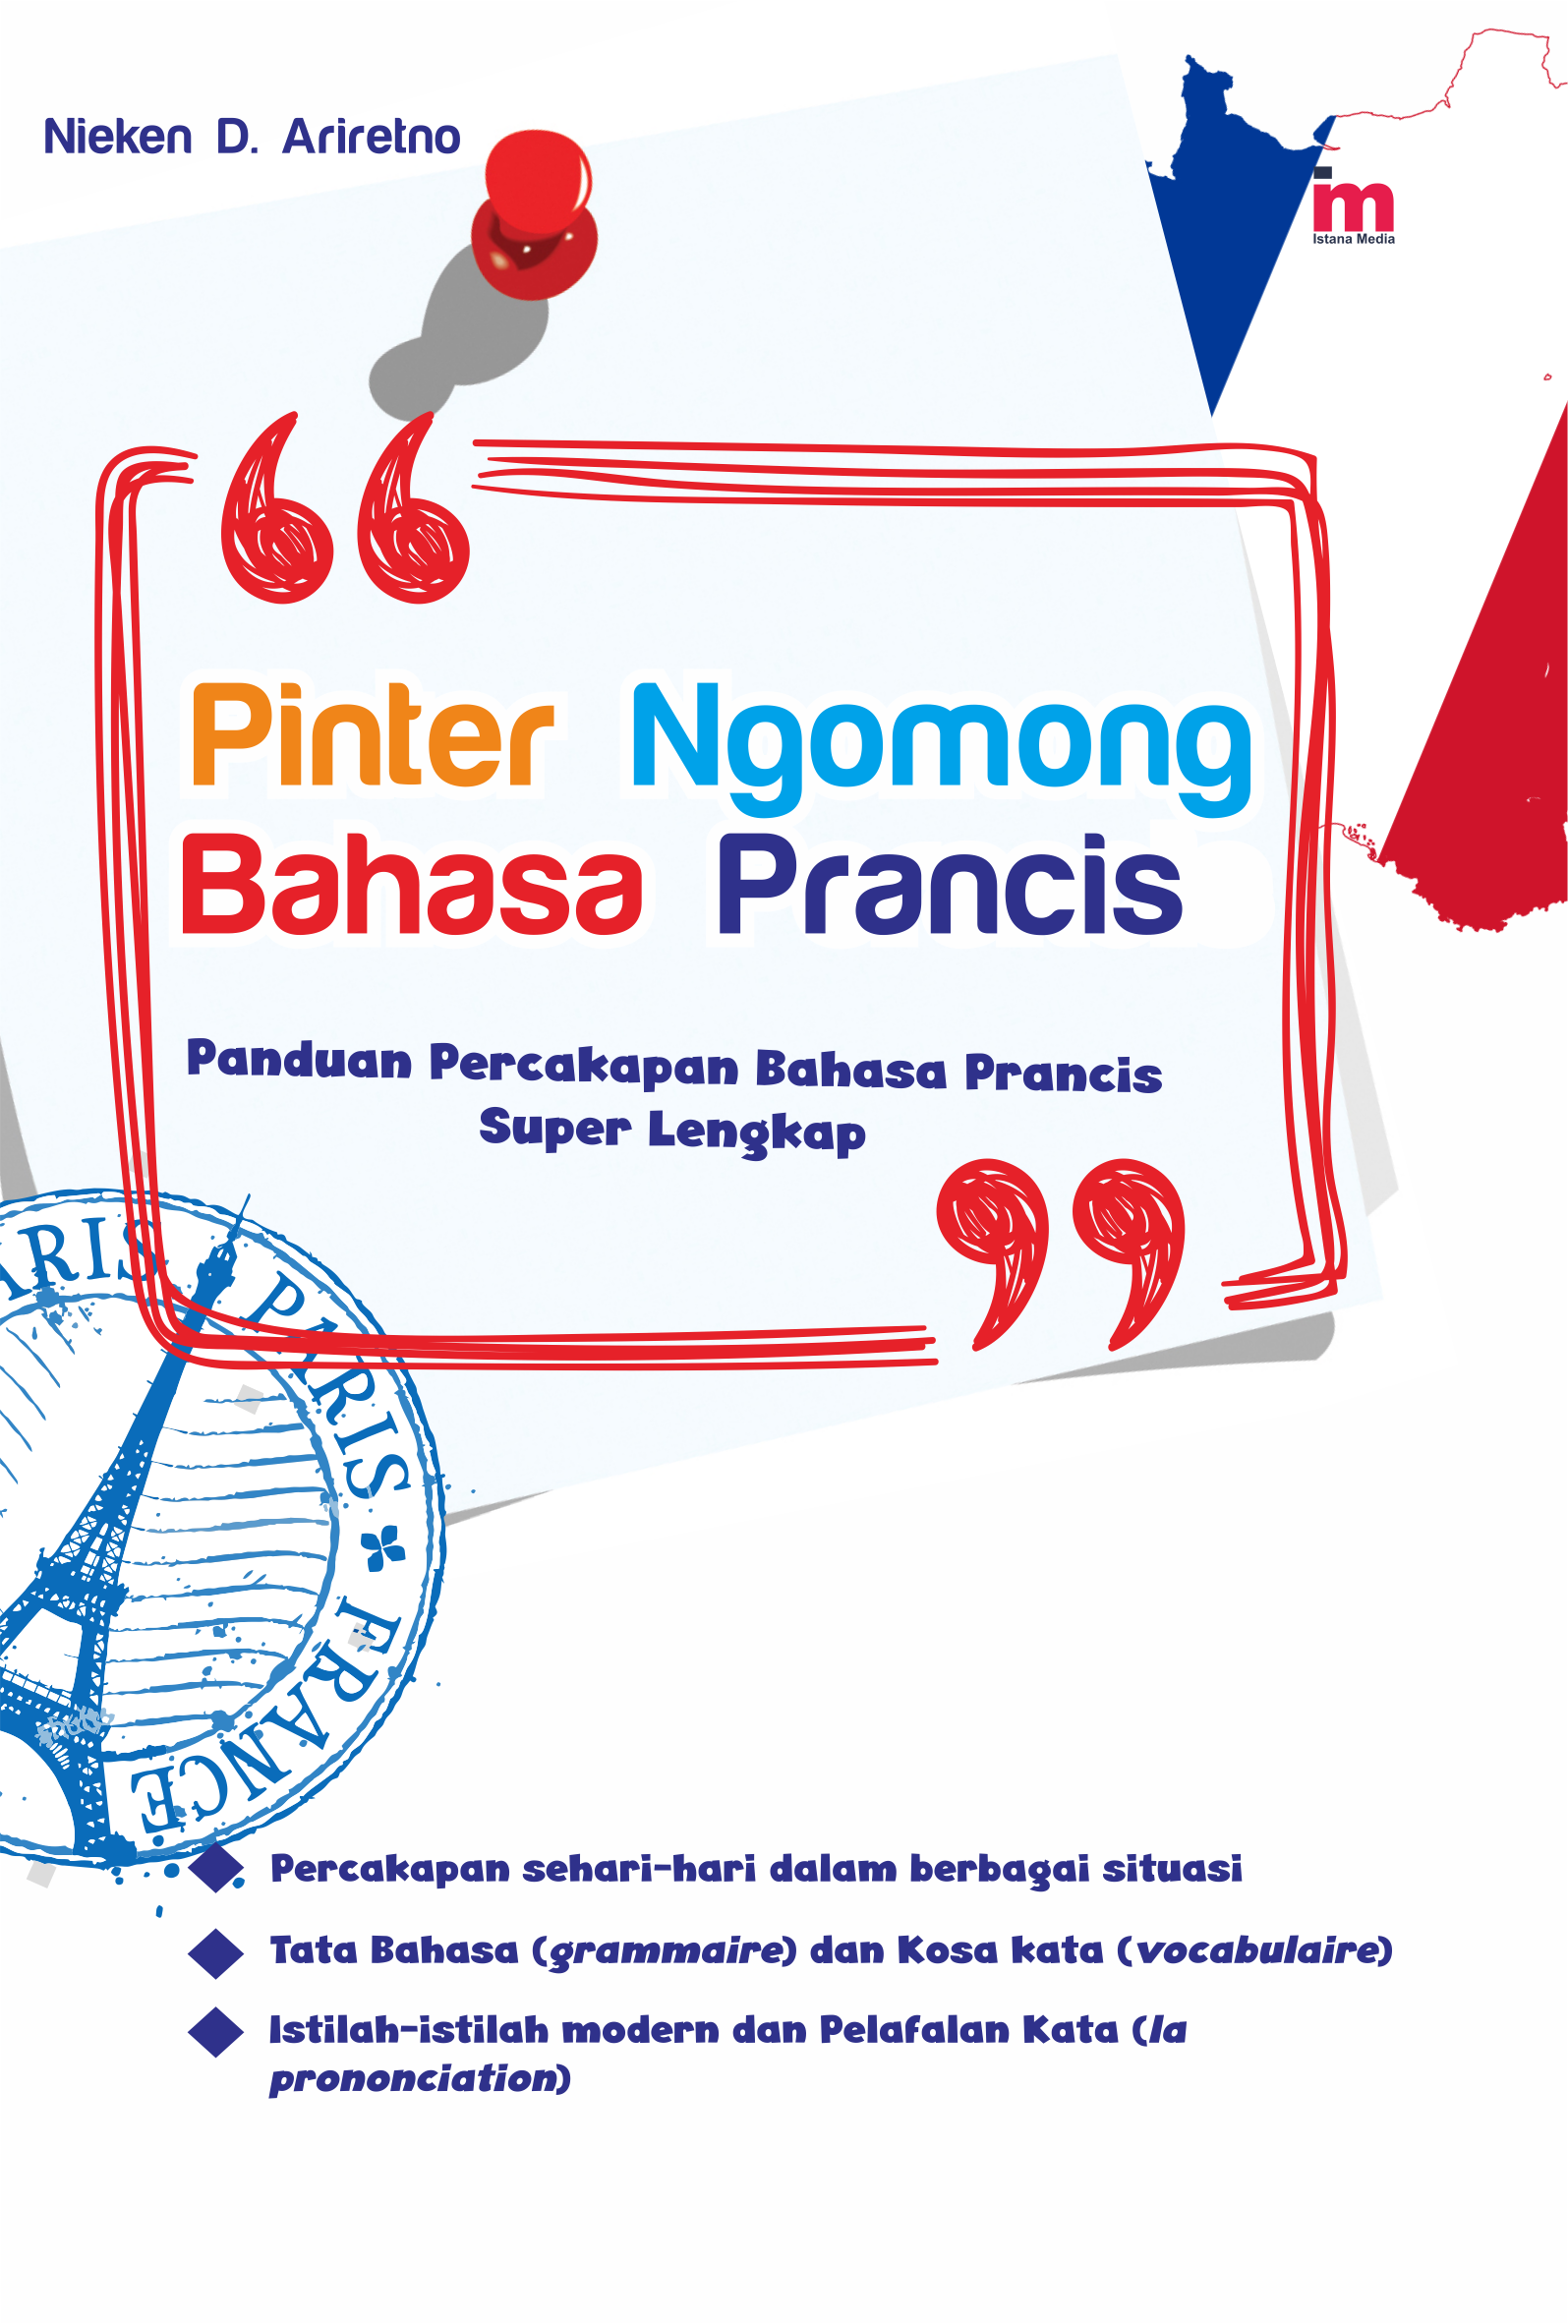 cover/(01-12-2019)pinter-ngomong-bahasa-prancis.png